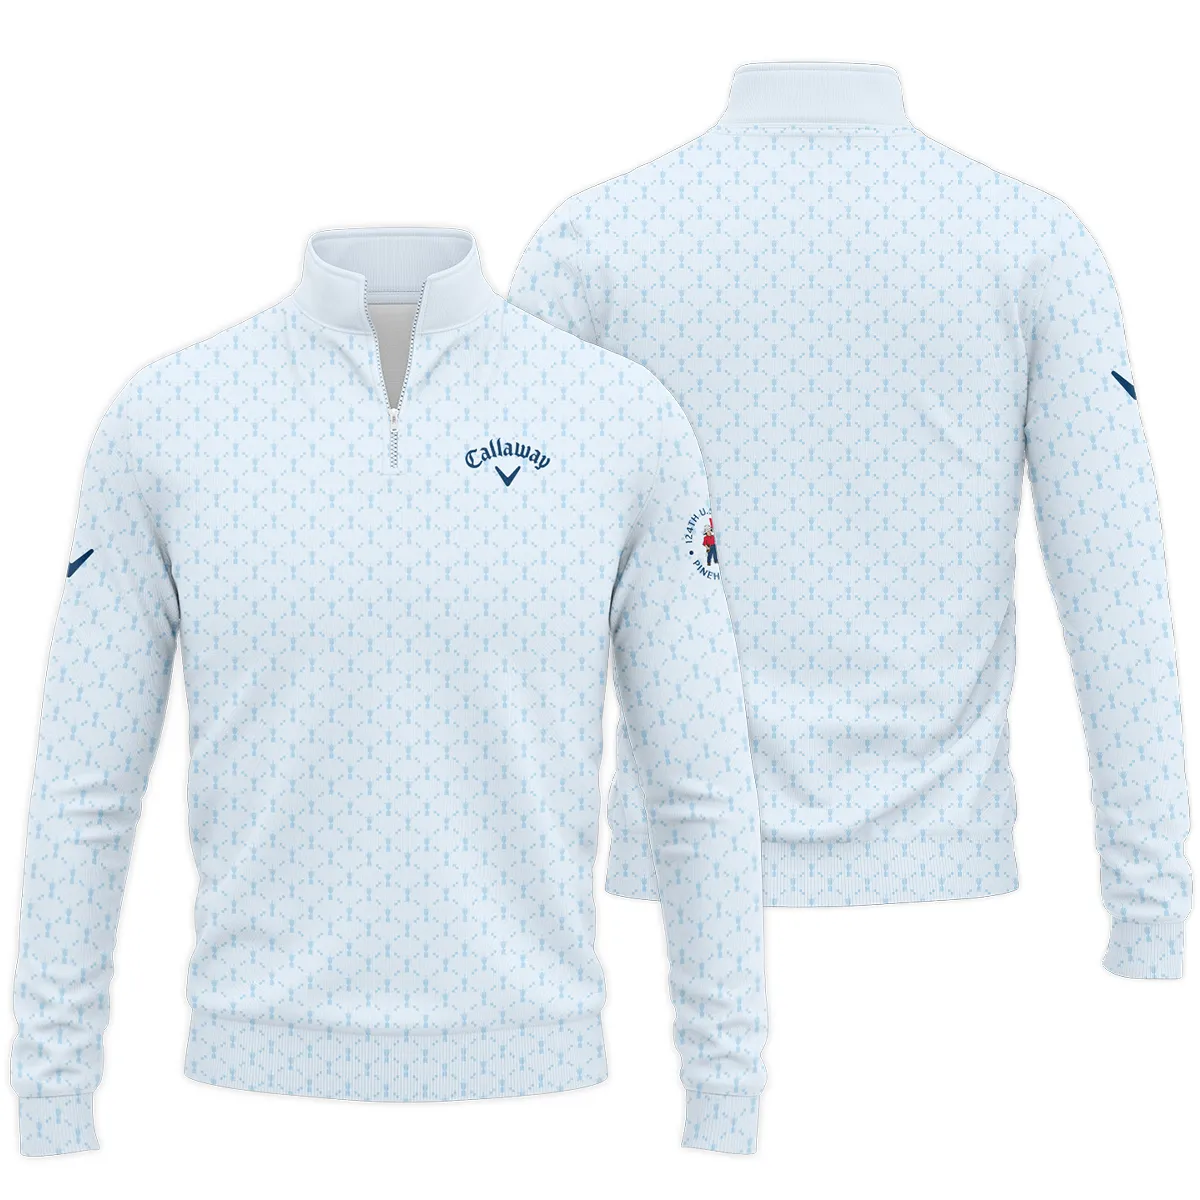 Golf Sport Pattern Blue Sport Uniform 124th U.S. Open Pinehurst Callaway Quarter-Zip Jacket Style Classic